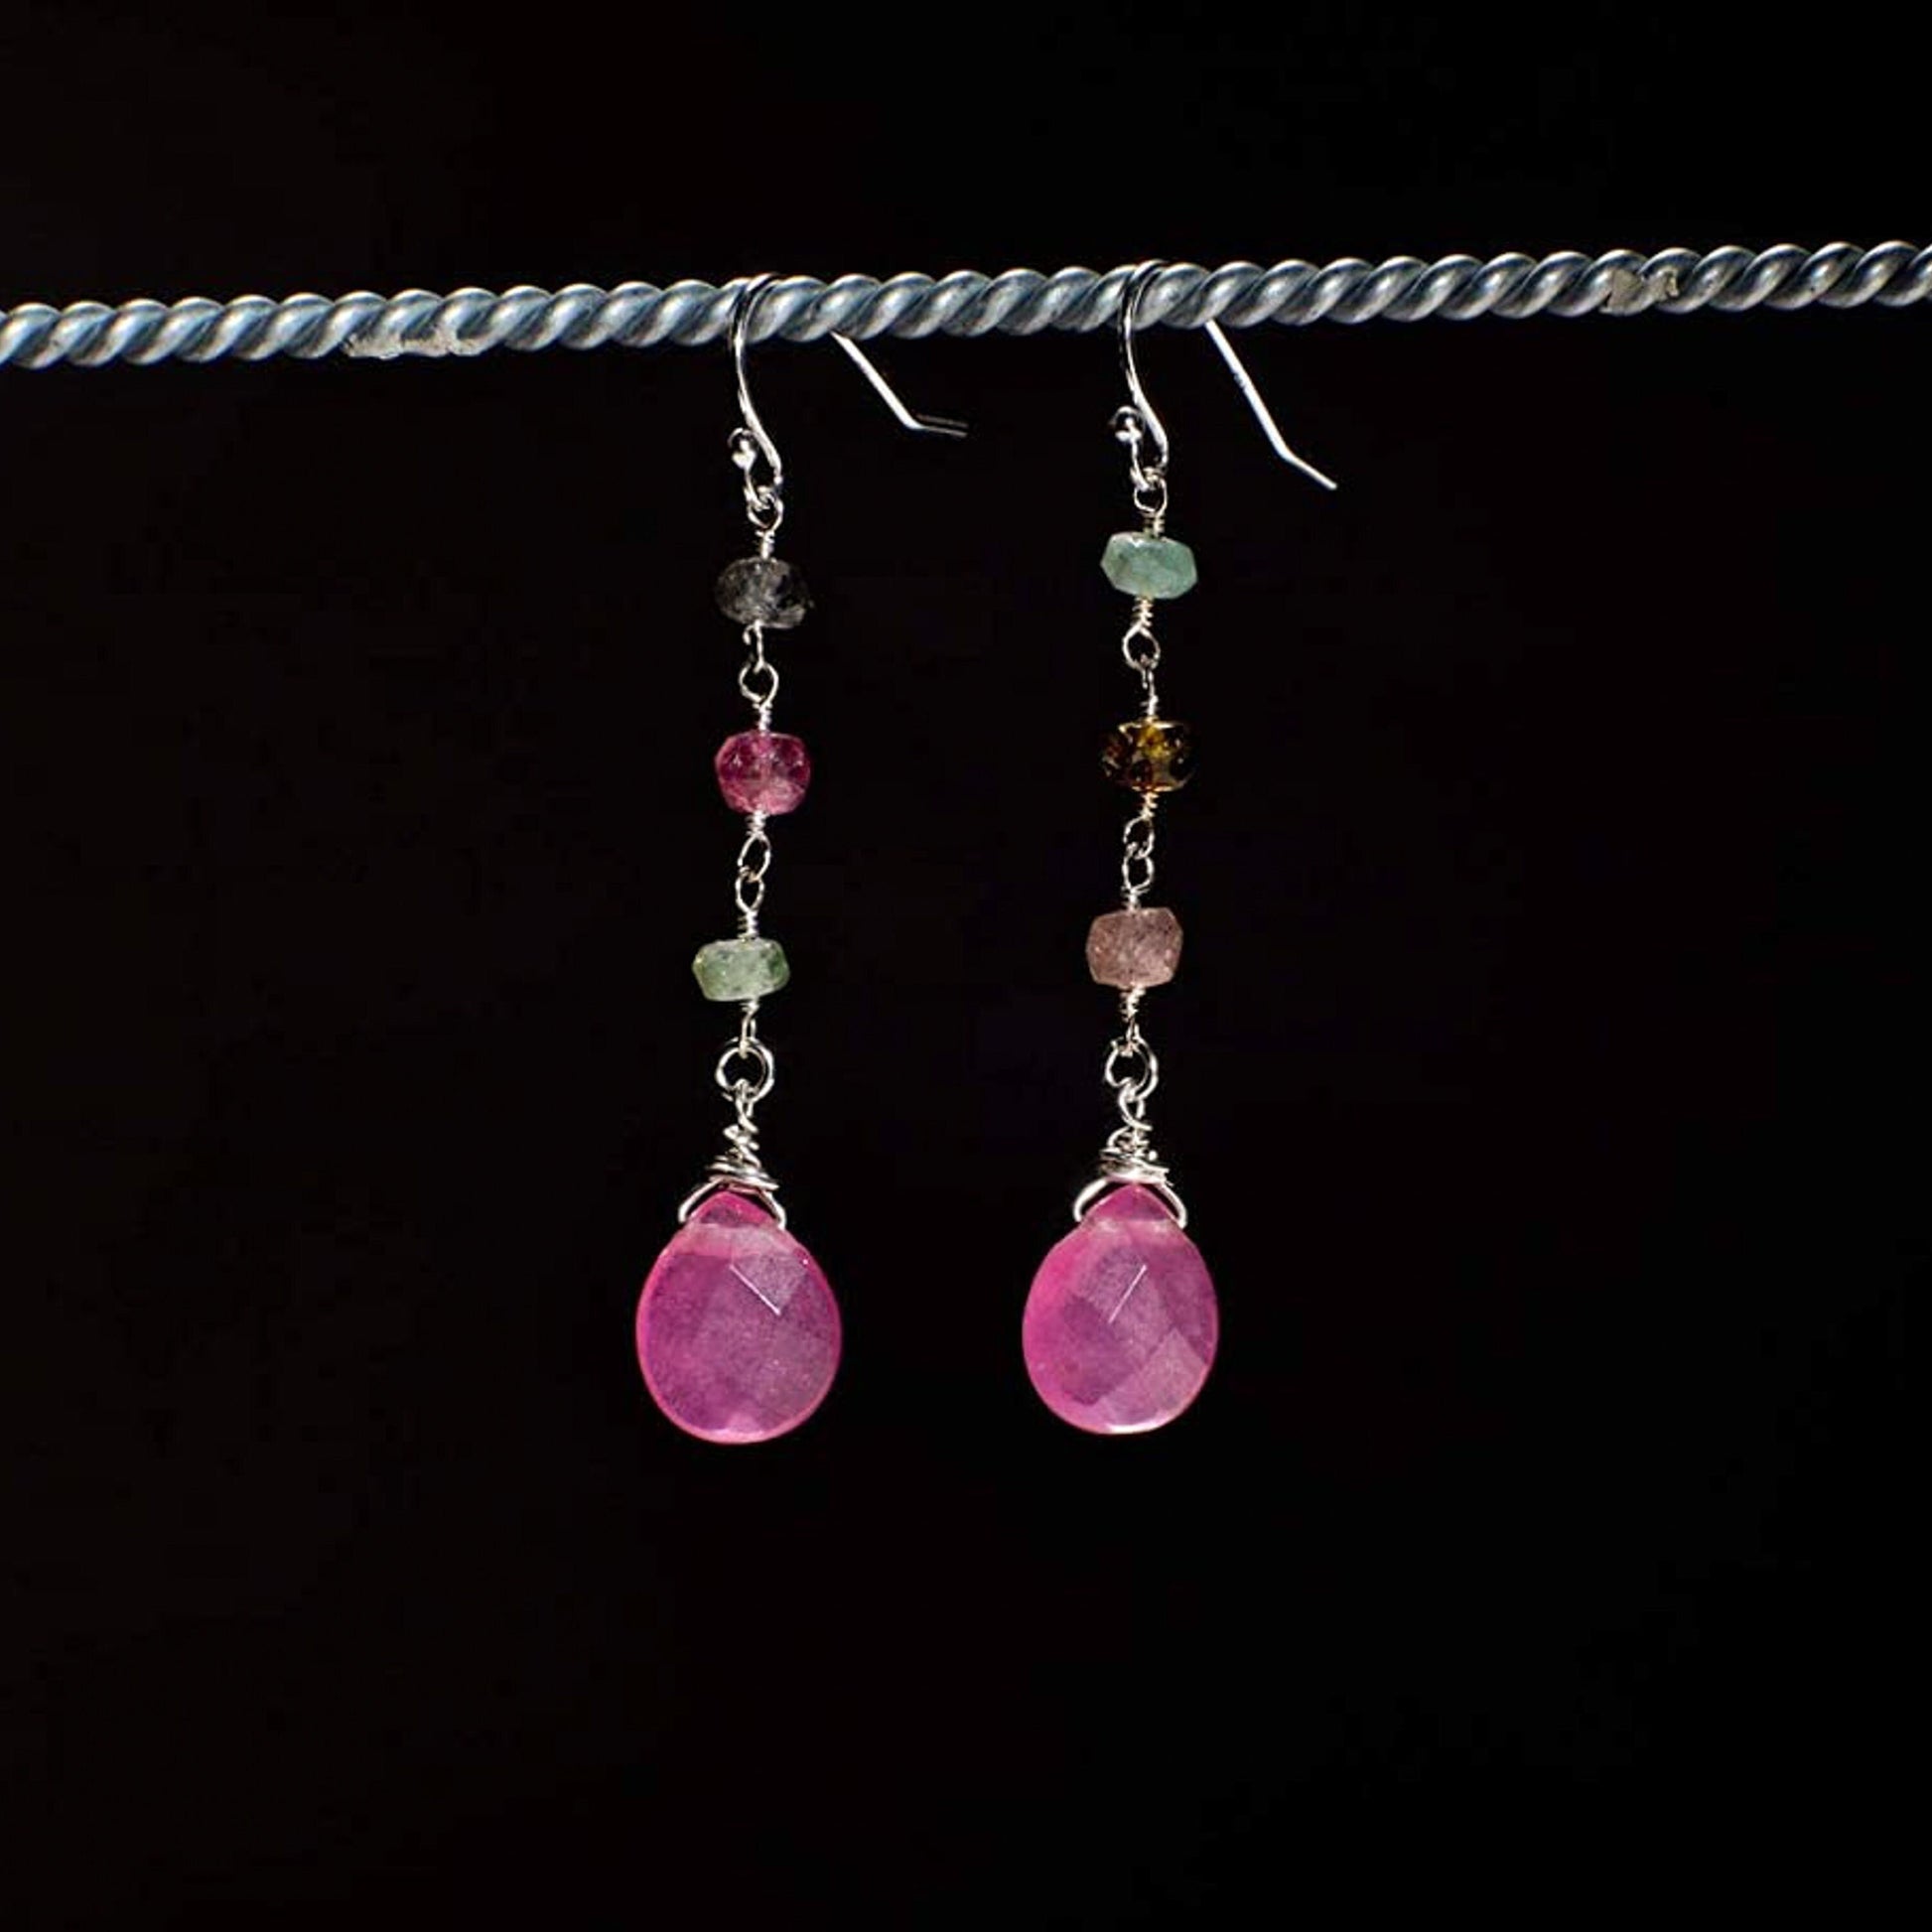 Watermelon Tourmaline Wire Wrapped Dangling Soft Pink Quartz Teardrop Earrings in 925 Sterling Silver Earwire, Handmade Gift for Her